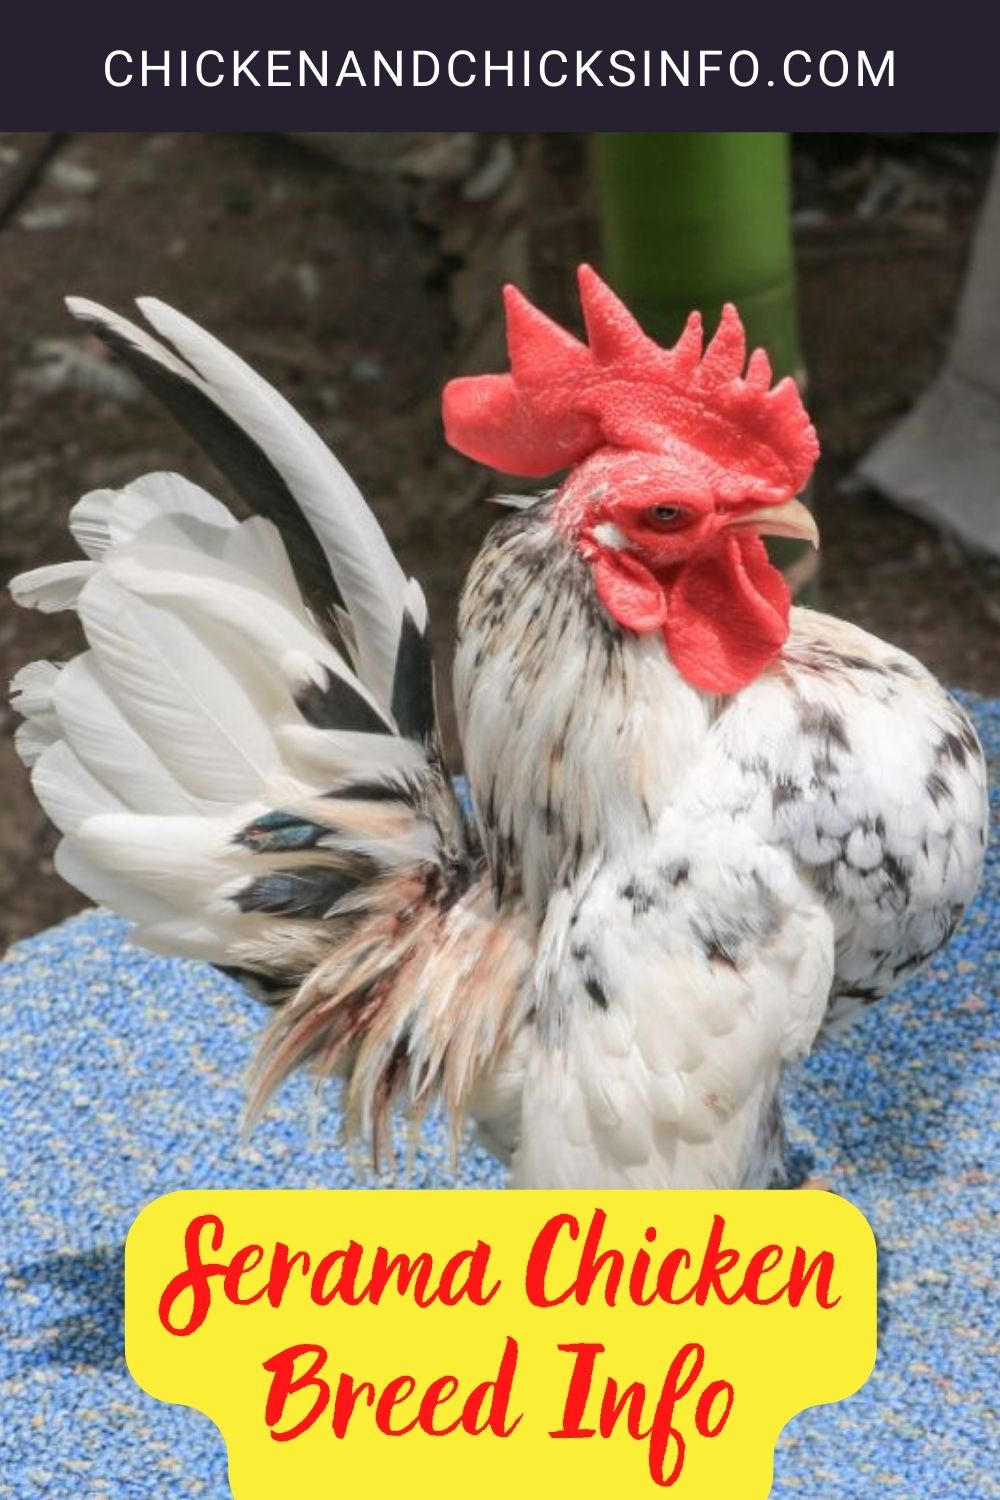 Serama Chicken Breed Info pinterest image.